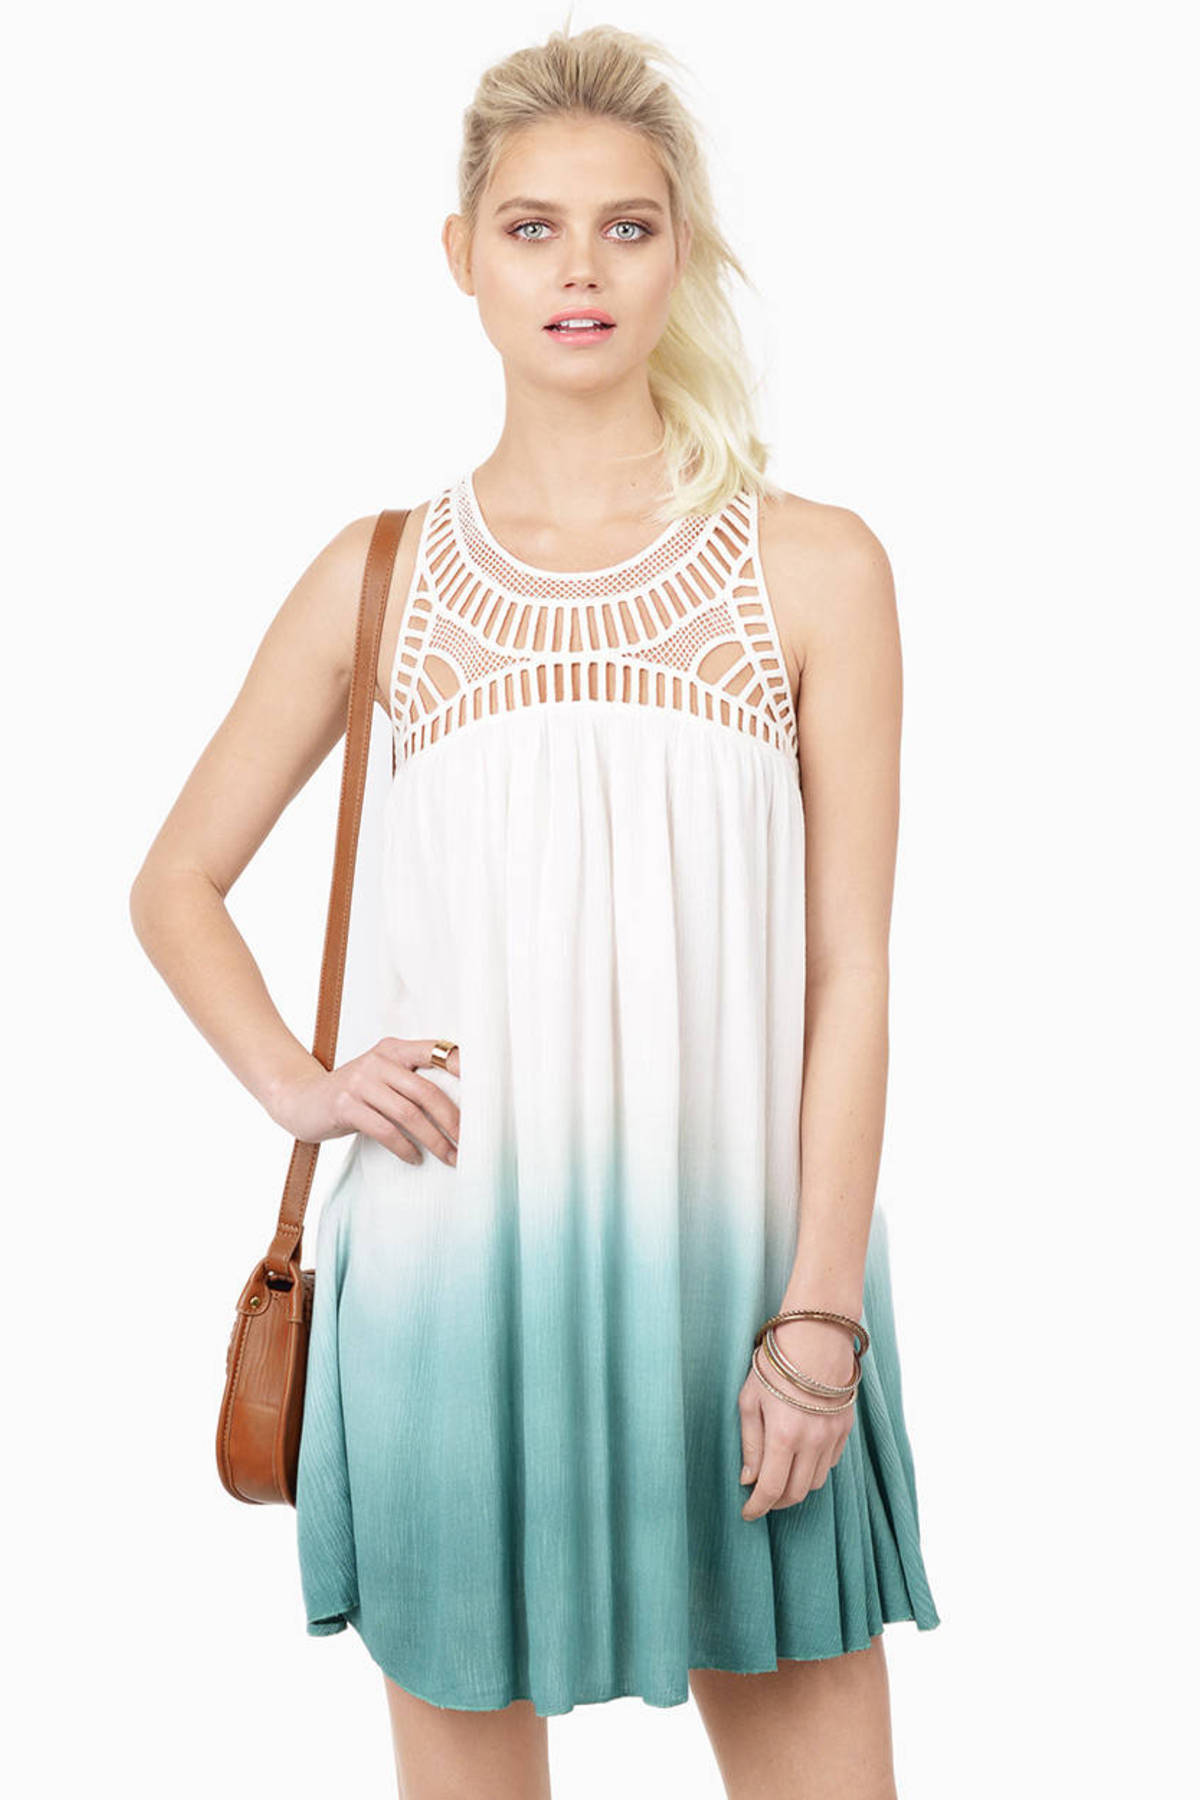 Looks Are Deceiving Dress in Cream & Green - $58 | Tobi US